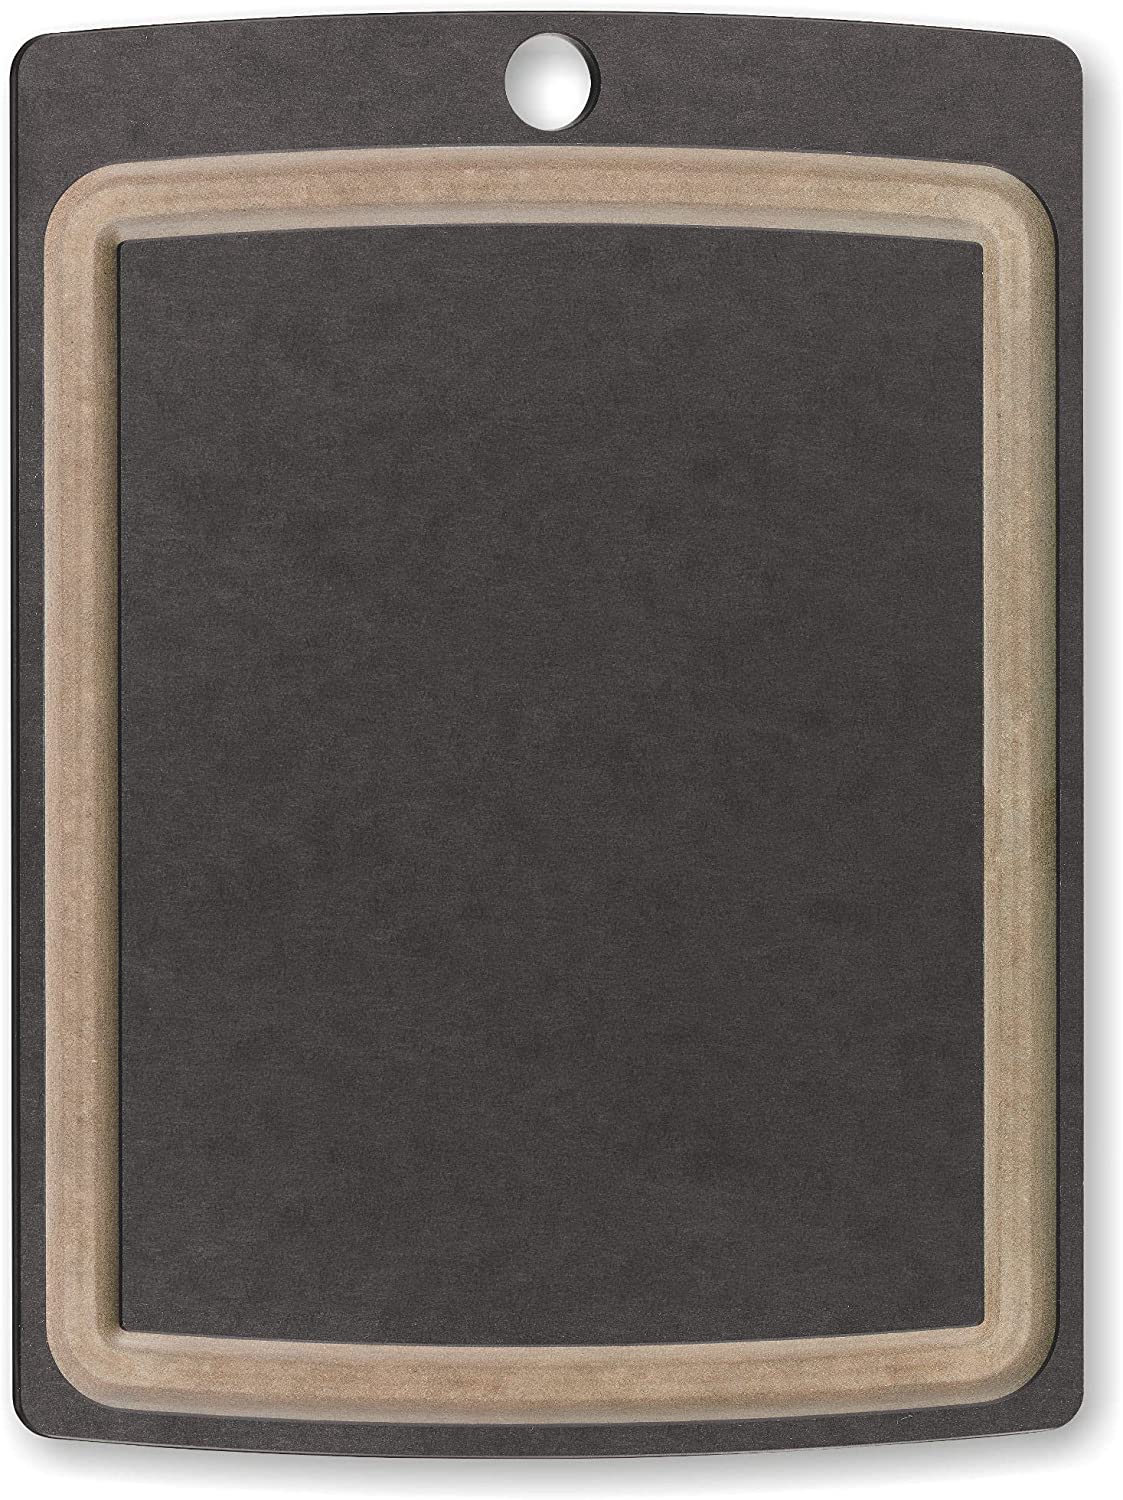 Victorinox Medium Allrounder Chopping Board, Stainless Steel, Black, 292 x 229 x 7 mm